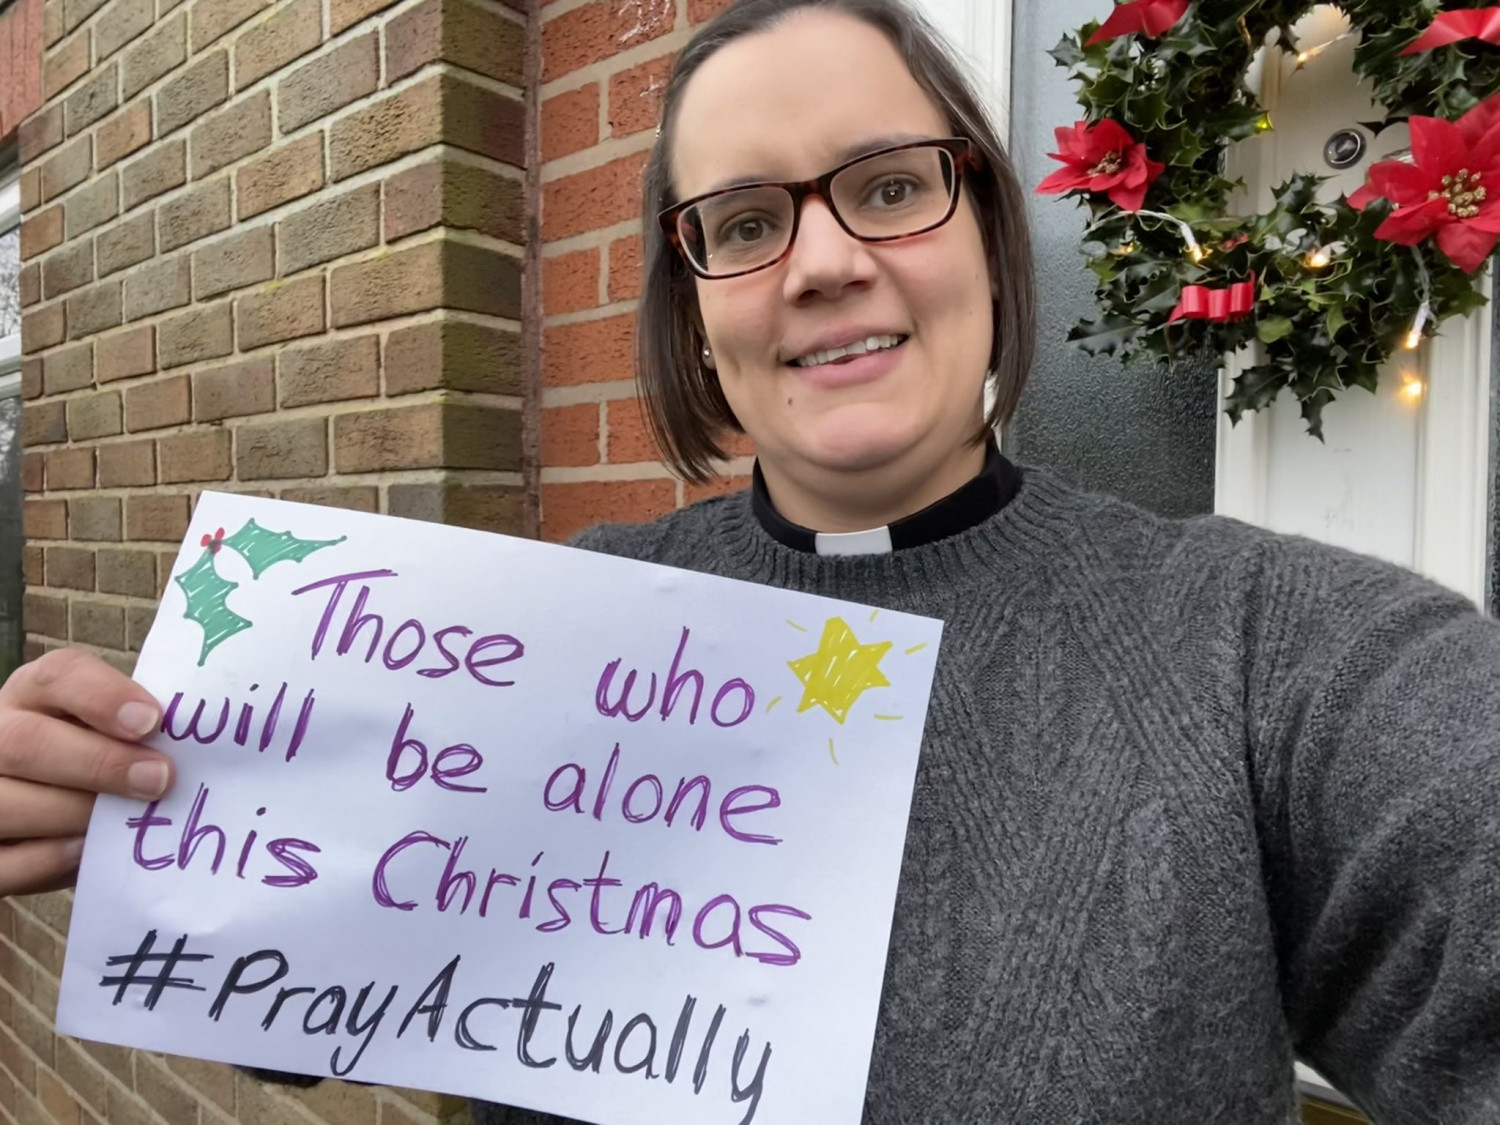 Revd Katy Cunliffe holding #prayactually sign